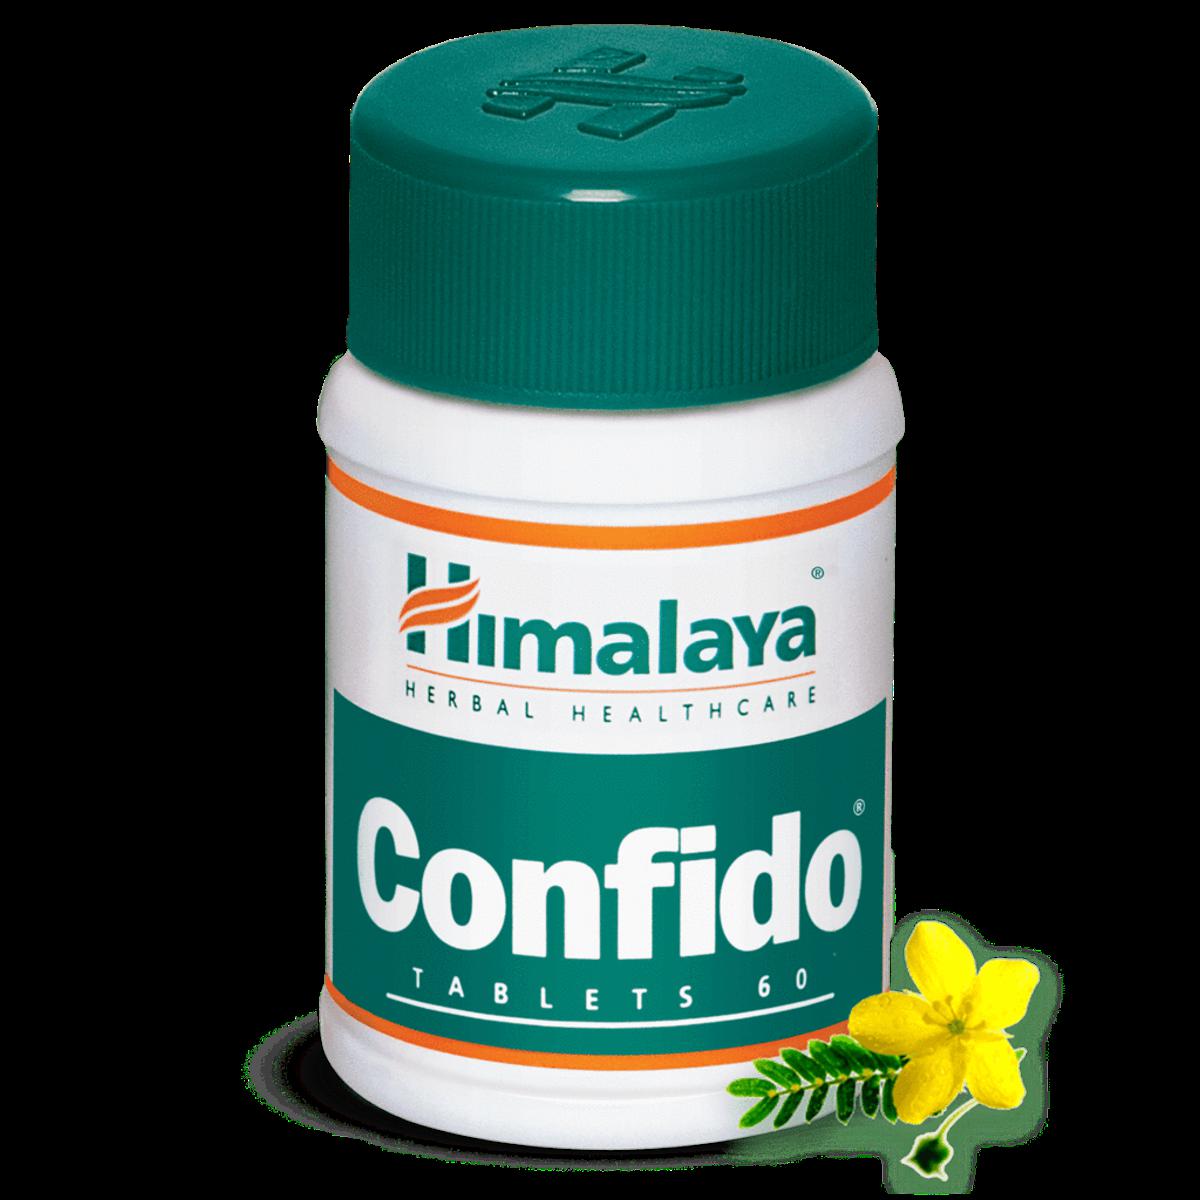 CONFIDO 60 COUNT INDIA BREAKFAST